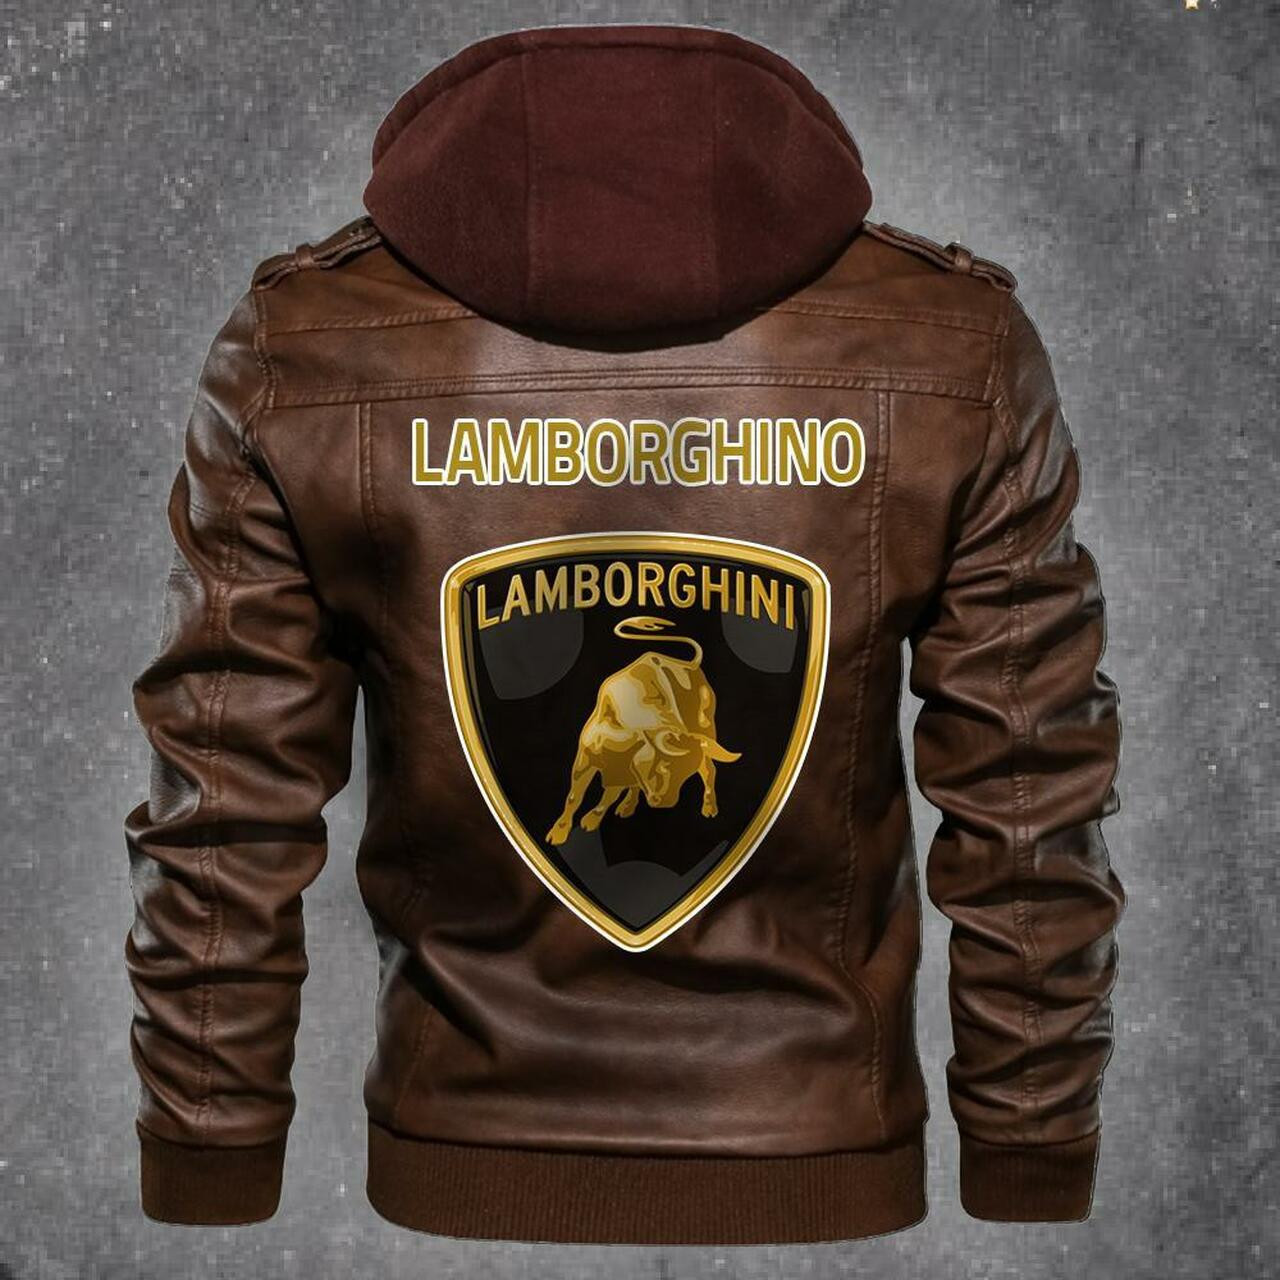 Top leather jacket Sells Best on Techcomshop 174